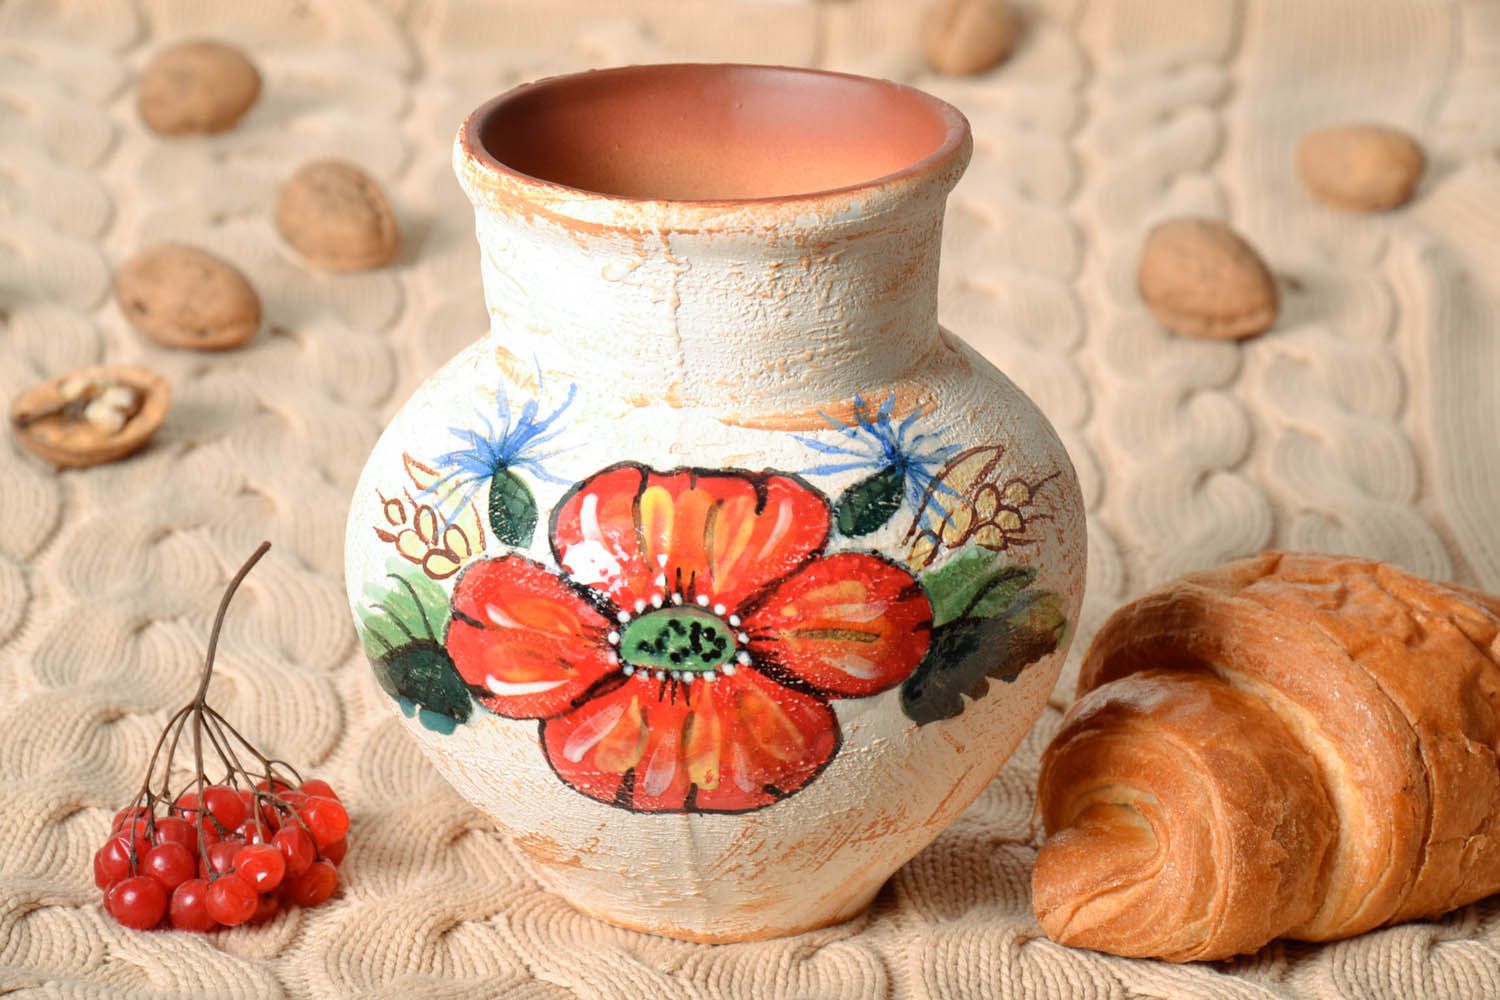 30 oz ceramic handmade village-style milk jug with floral décor 2 lb photo 1